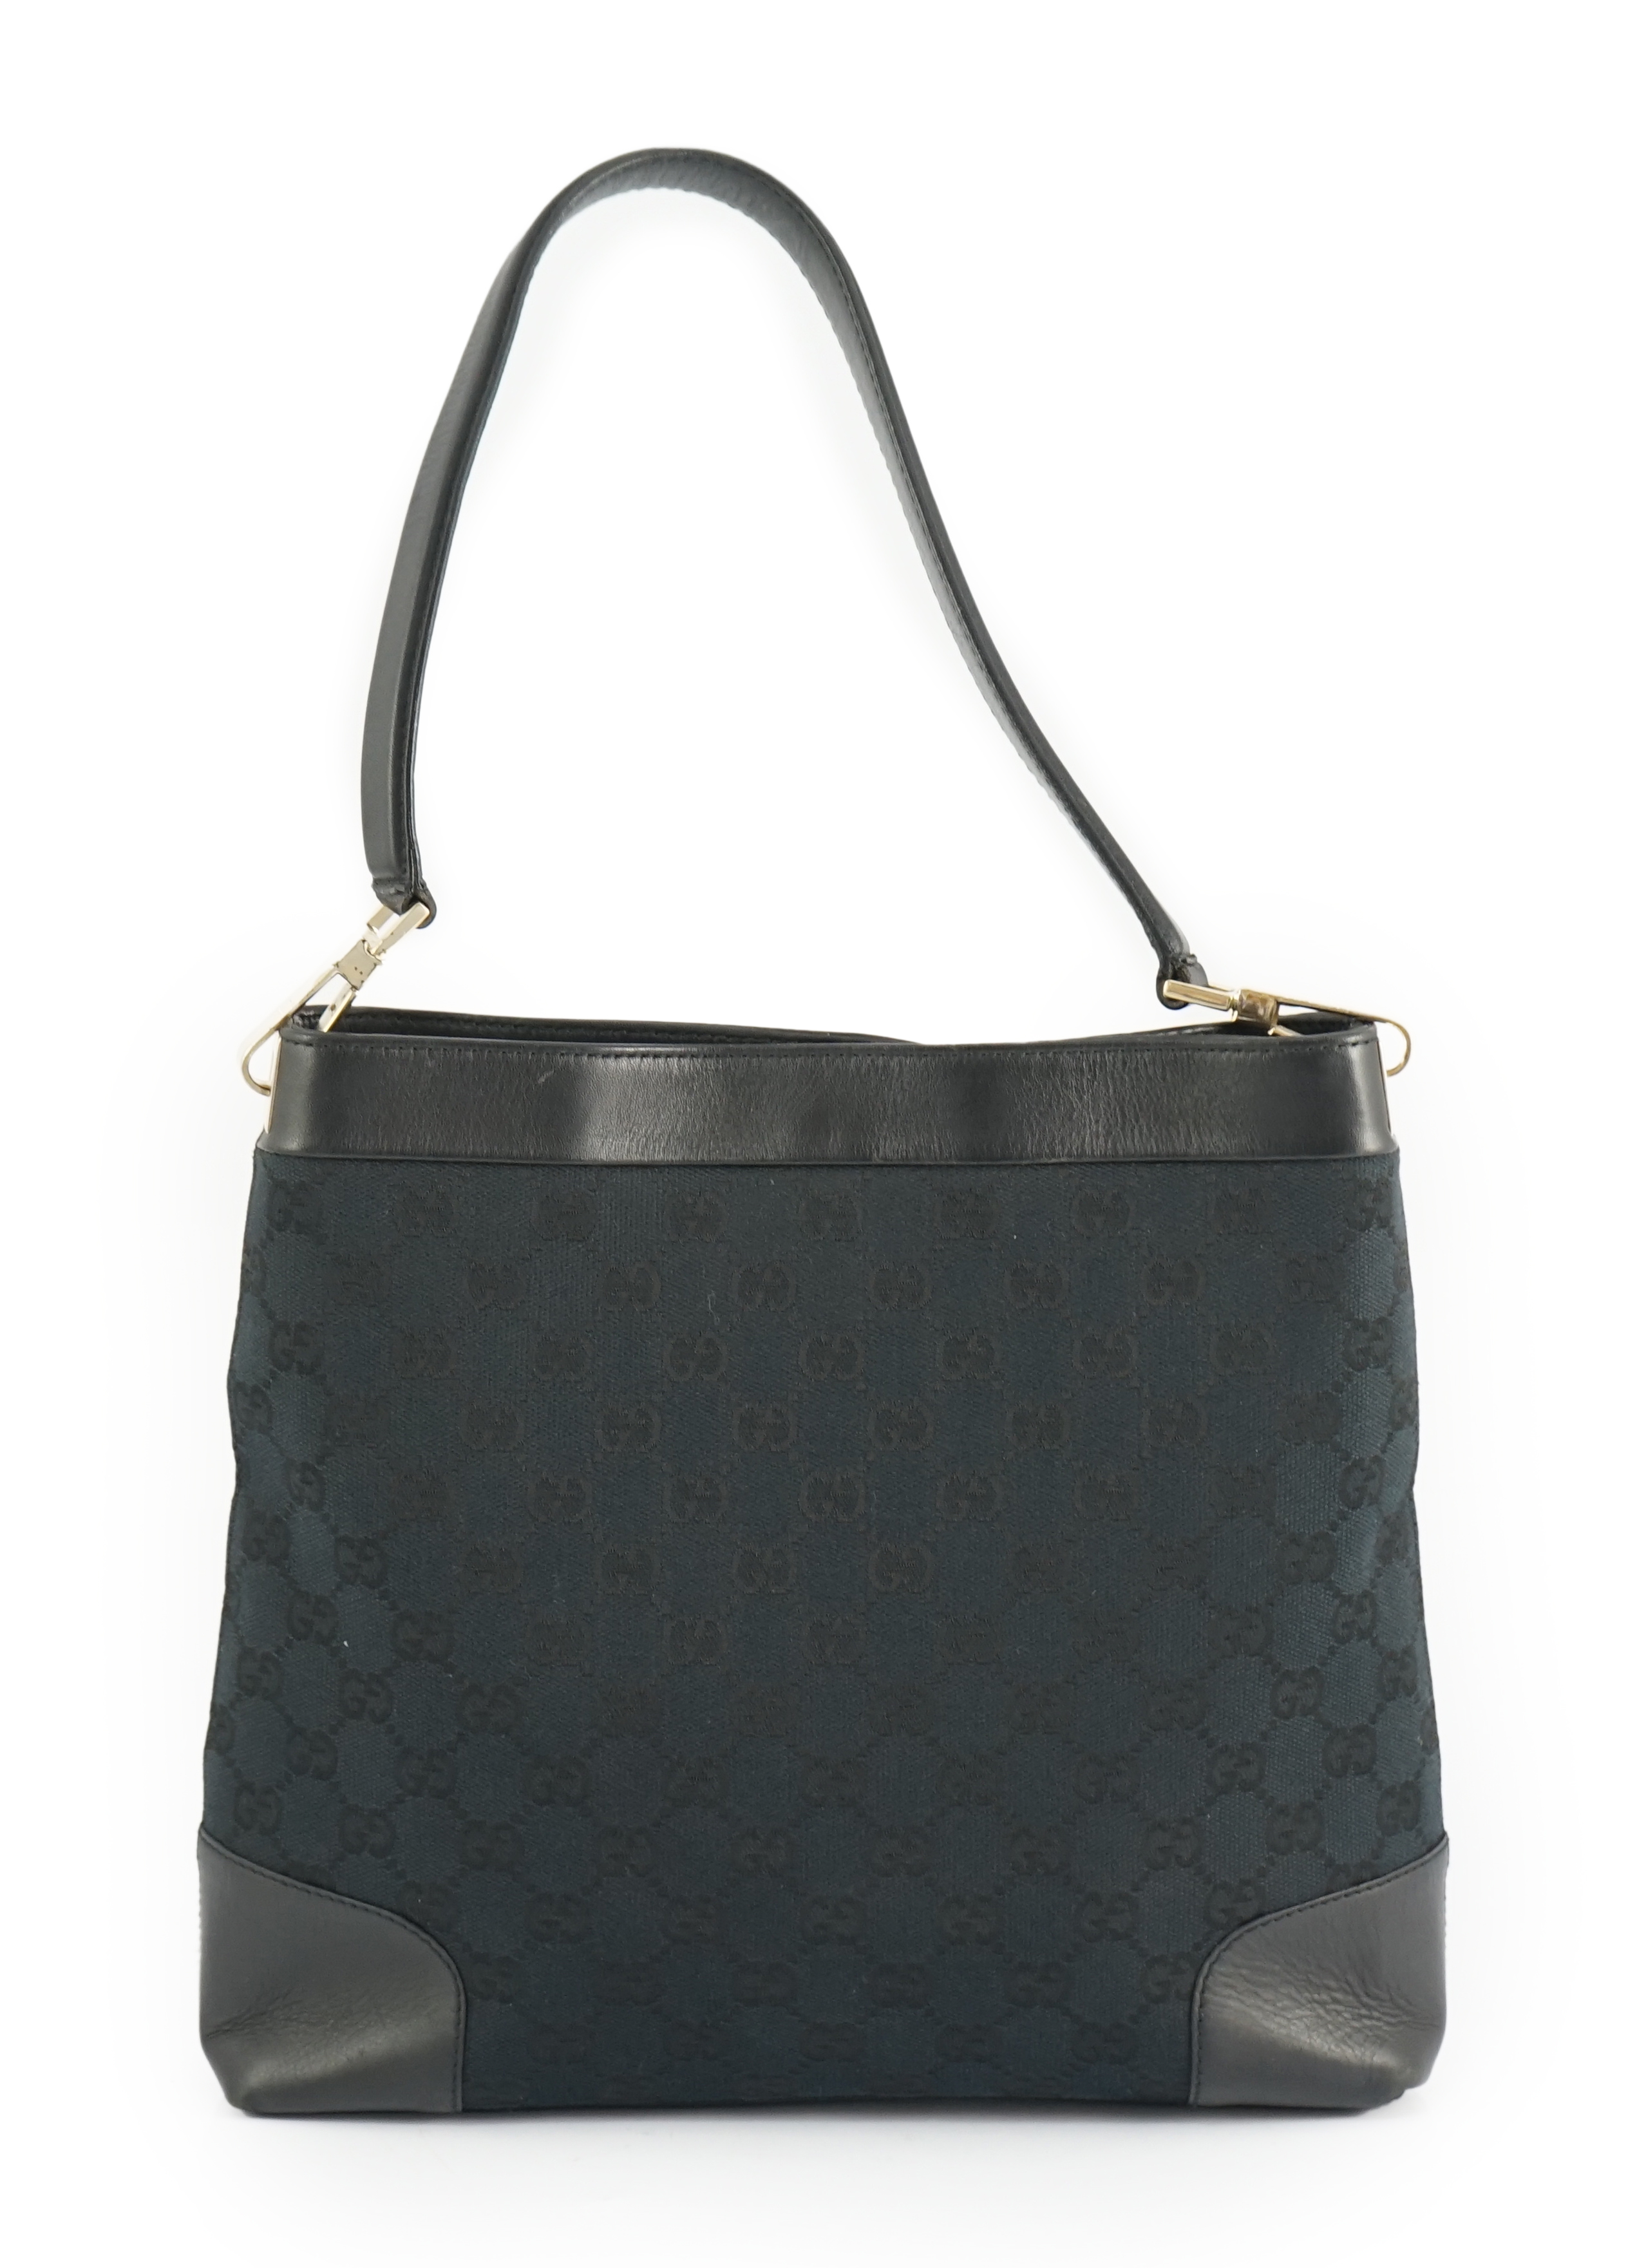 A Gucci black GG canvas shoulder bag width 26cm, depth 6cm, approx height 25cm